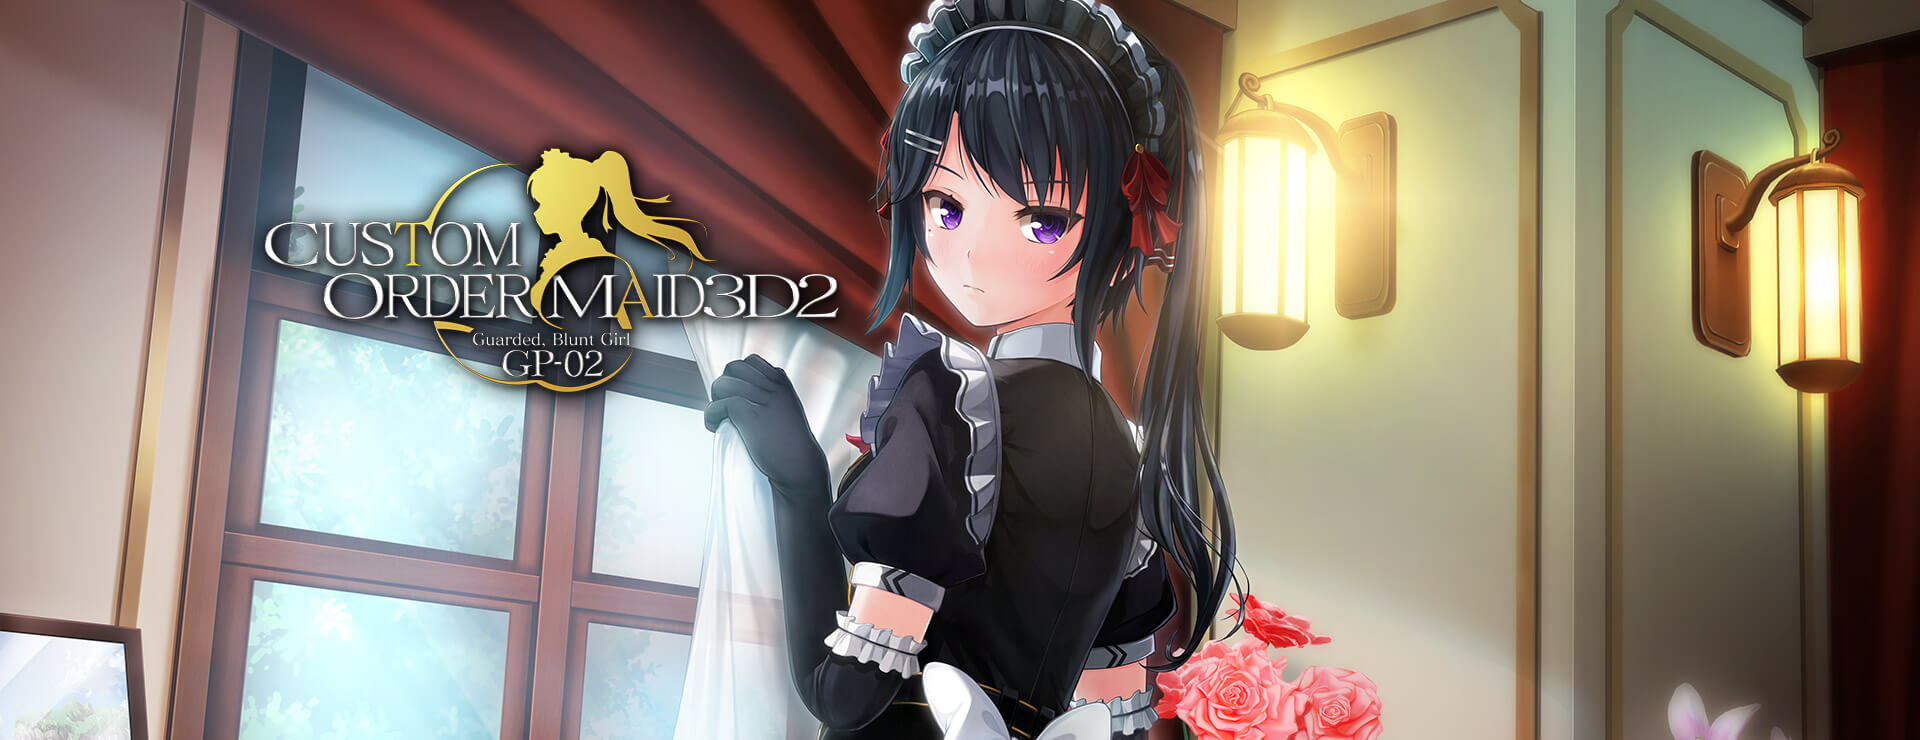 Custom Order Maid 3D2: Guarded, Blunt Girl GP02 DLC - Simulation Game